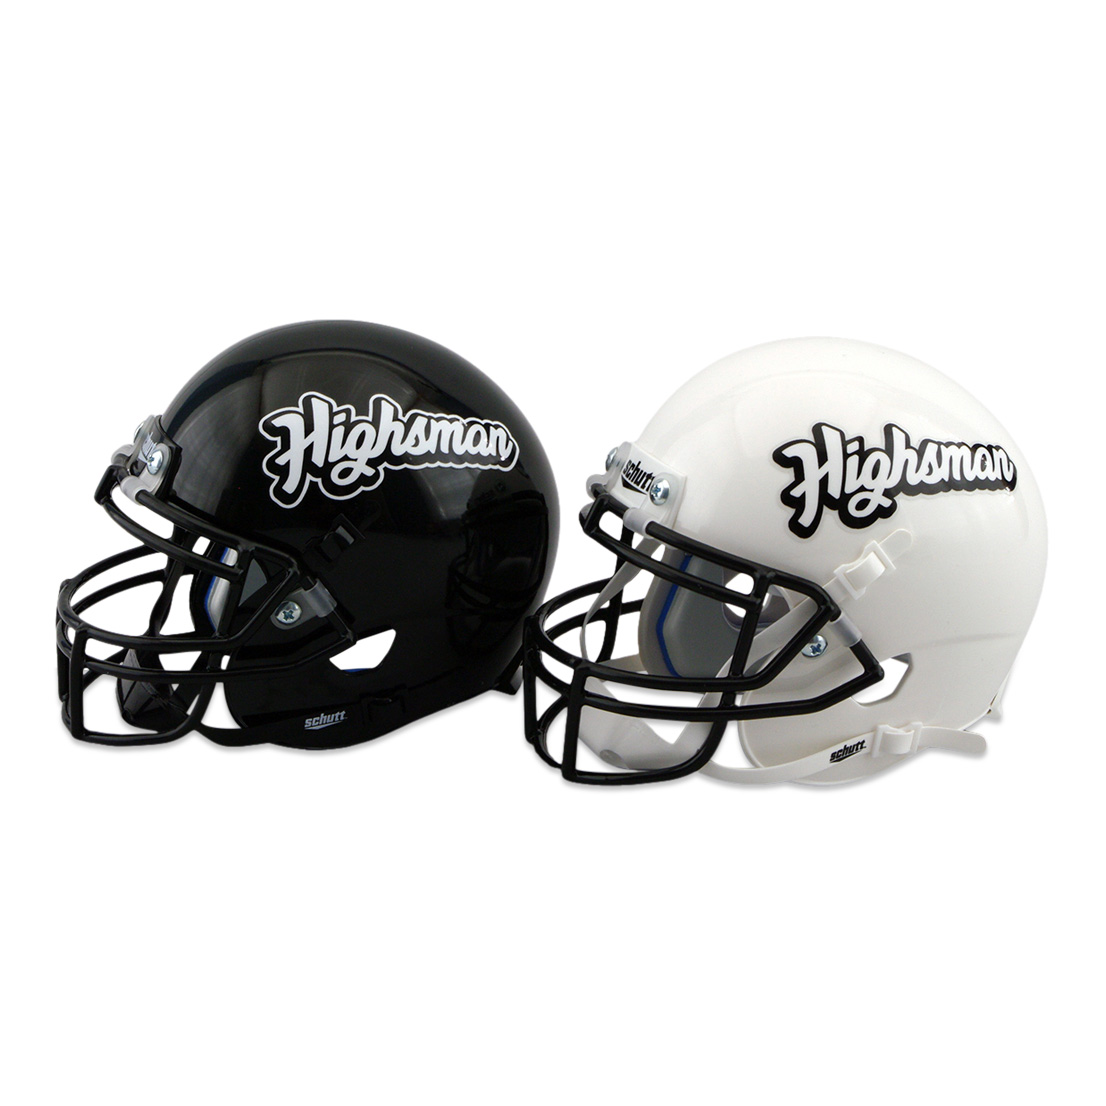 highsman custom mini football helmets